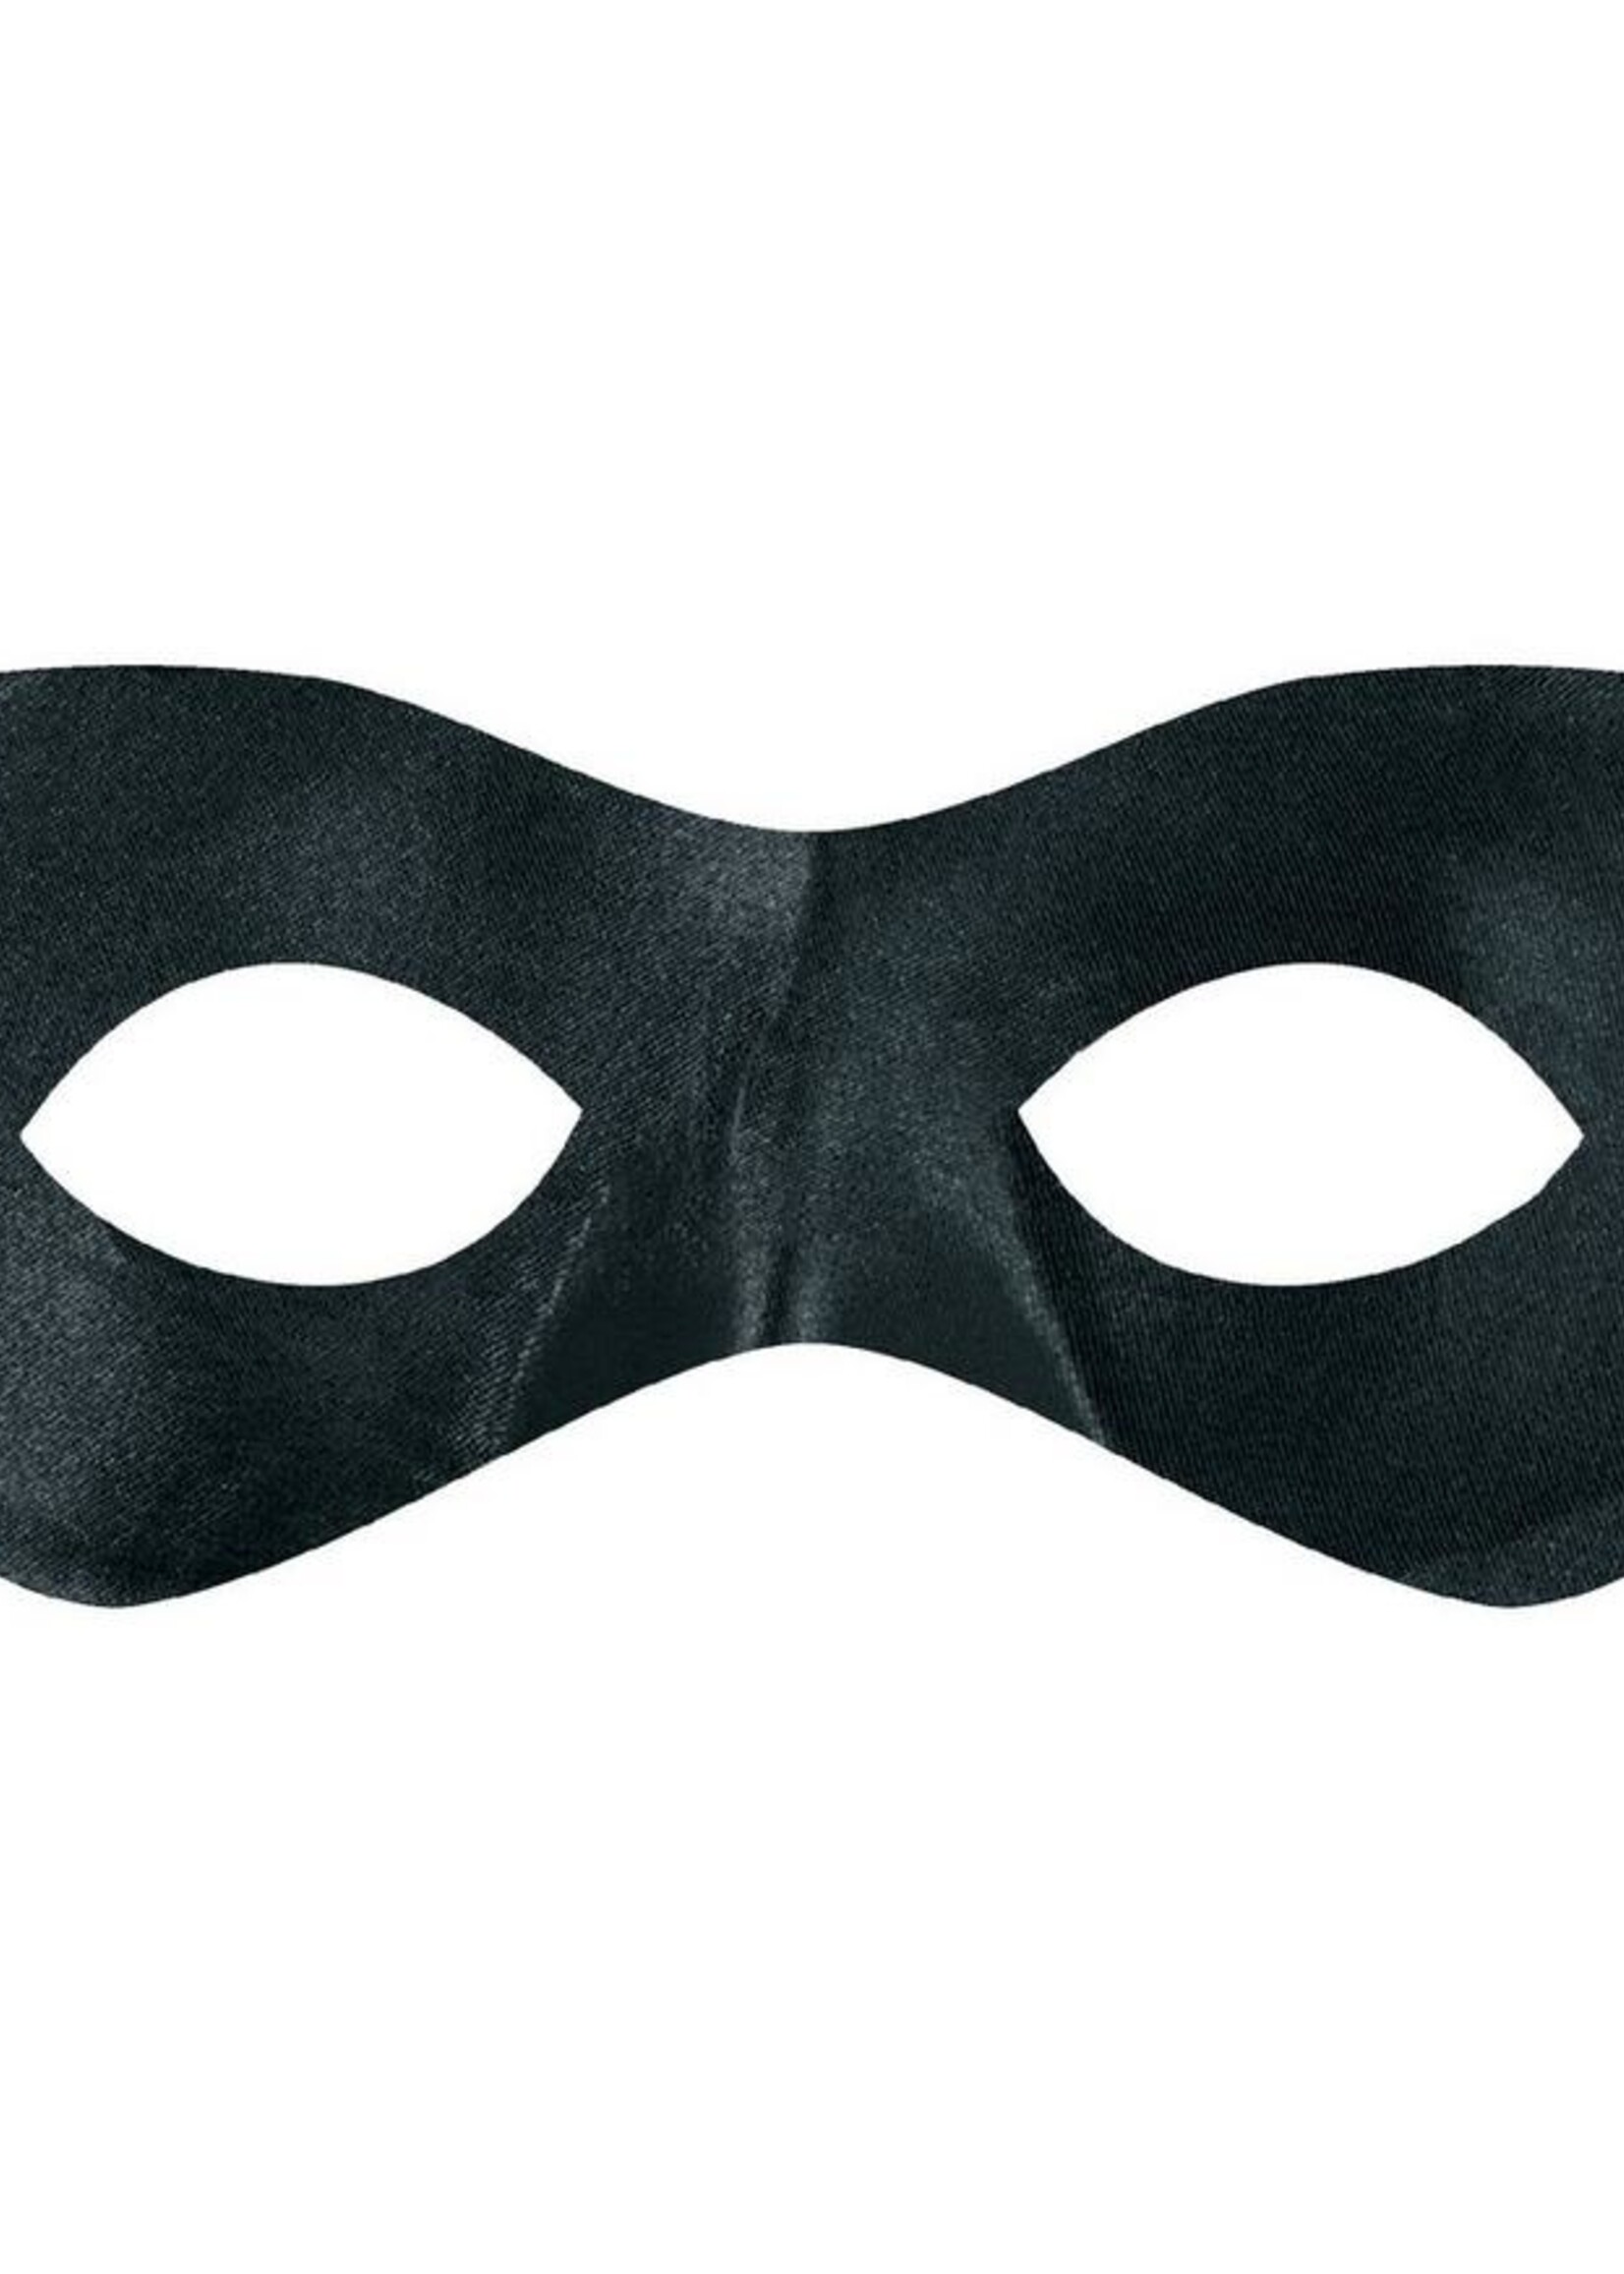 Thief Mask